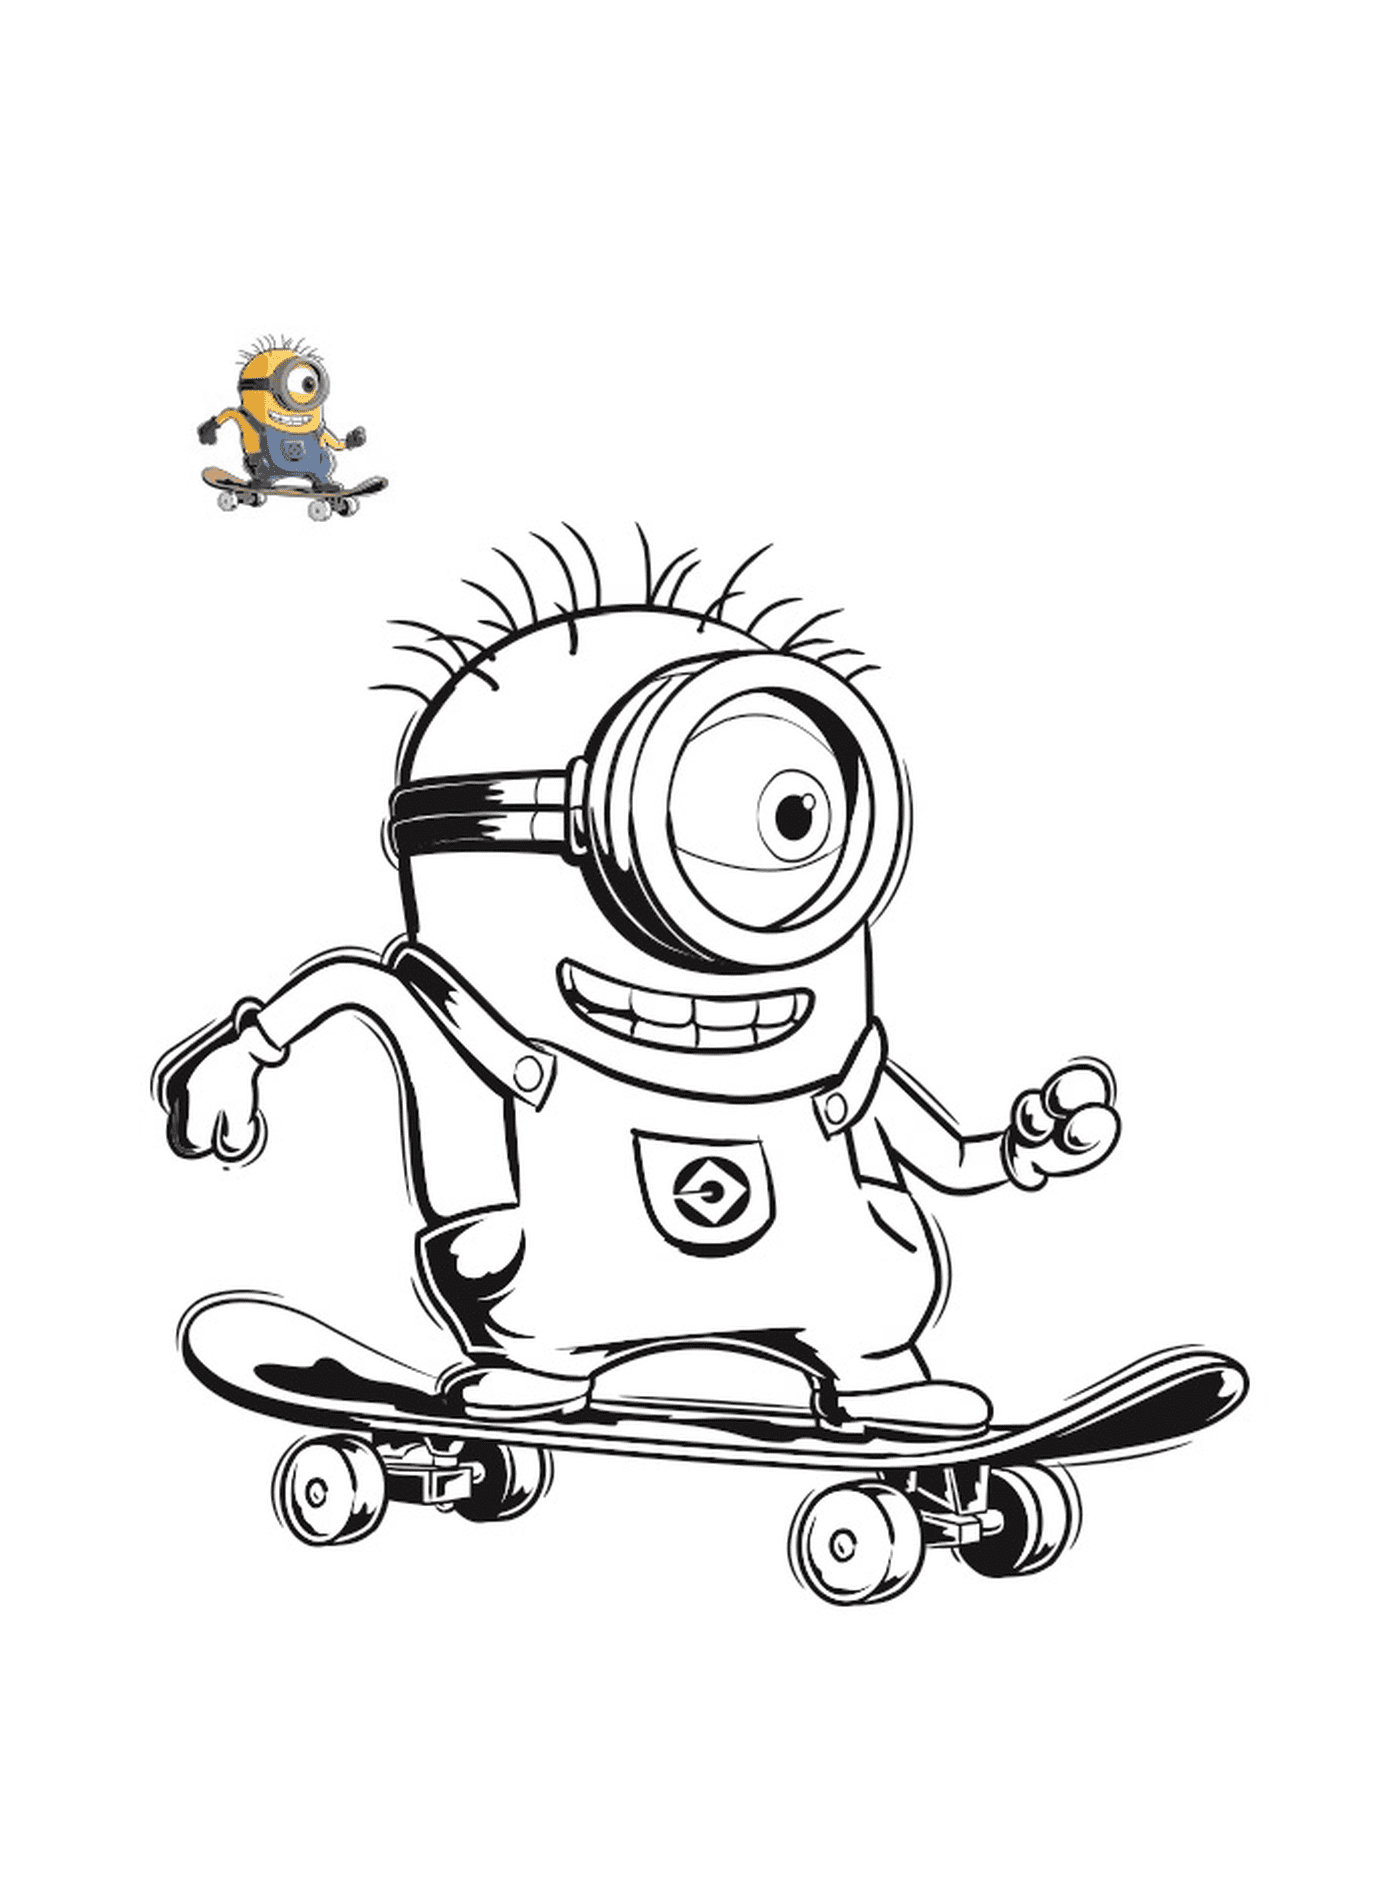  Minion skates on his board 